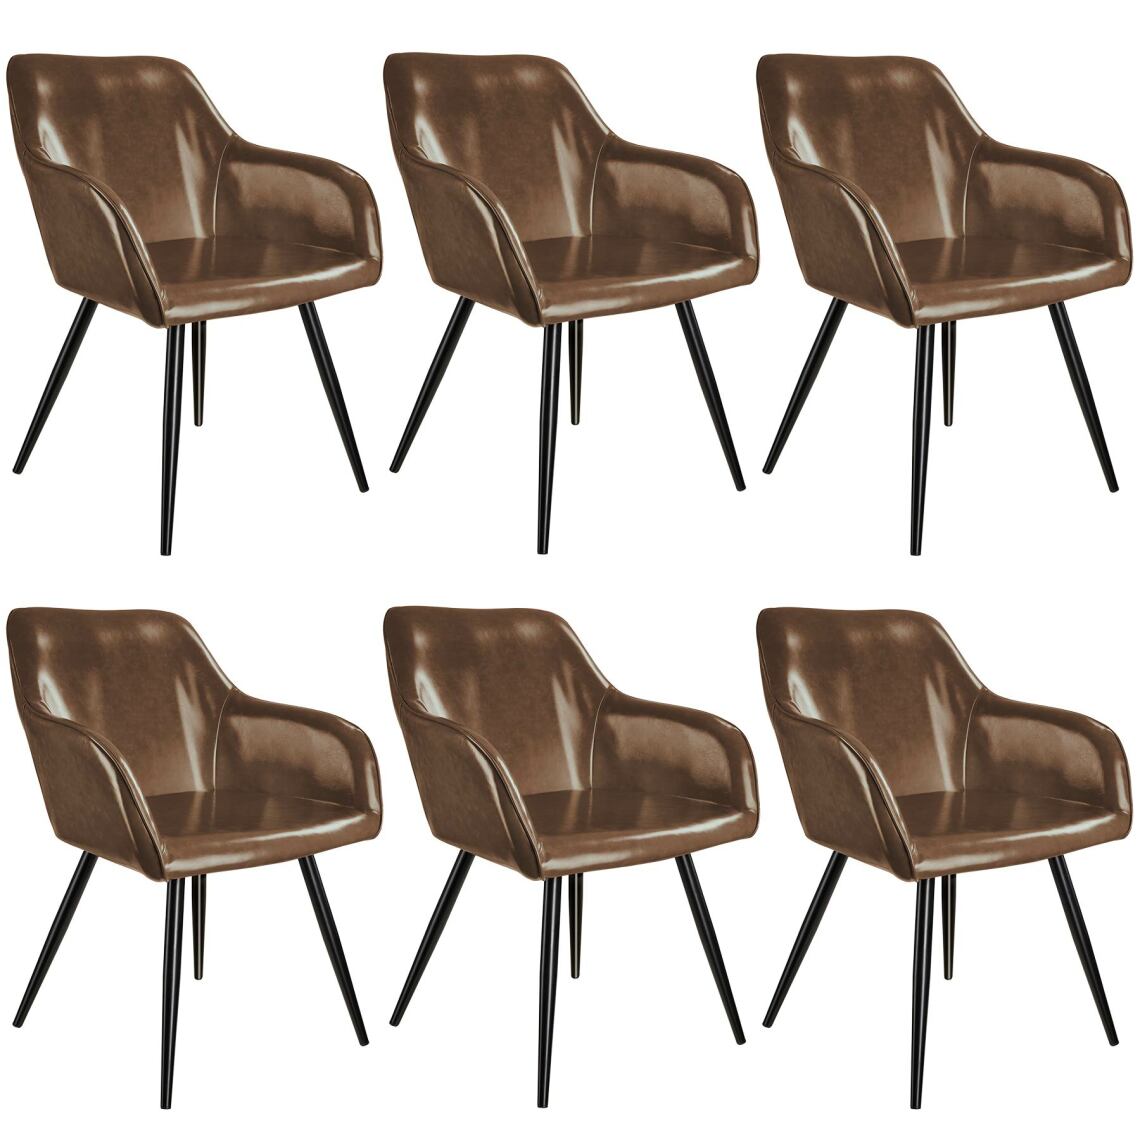 Tectake - 6 Chaises Marilyn en cuir synthétique - brun foncé-noir - Chaises